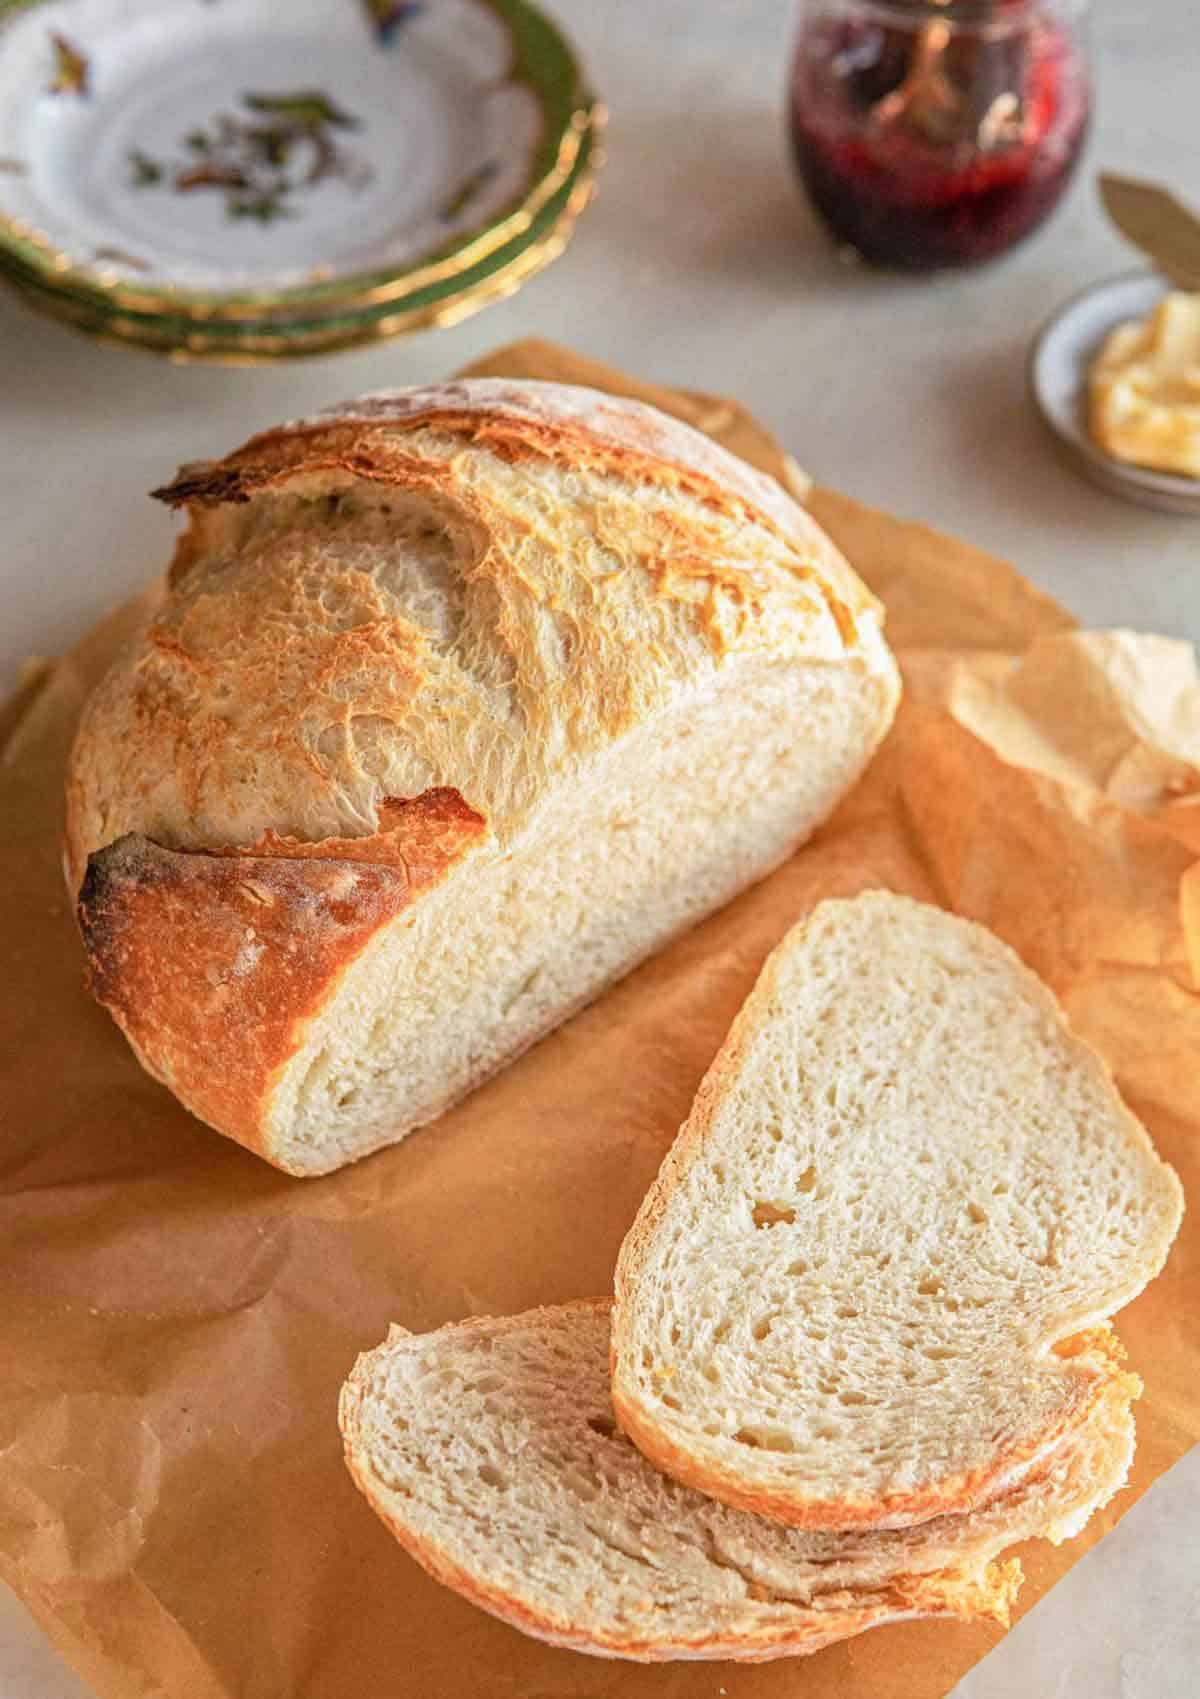 I. Introduction to Artisanal Bread Baking